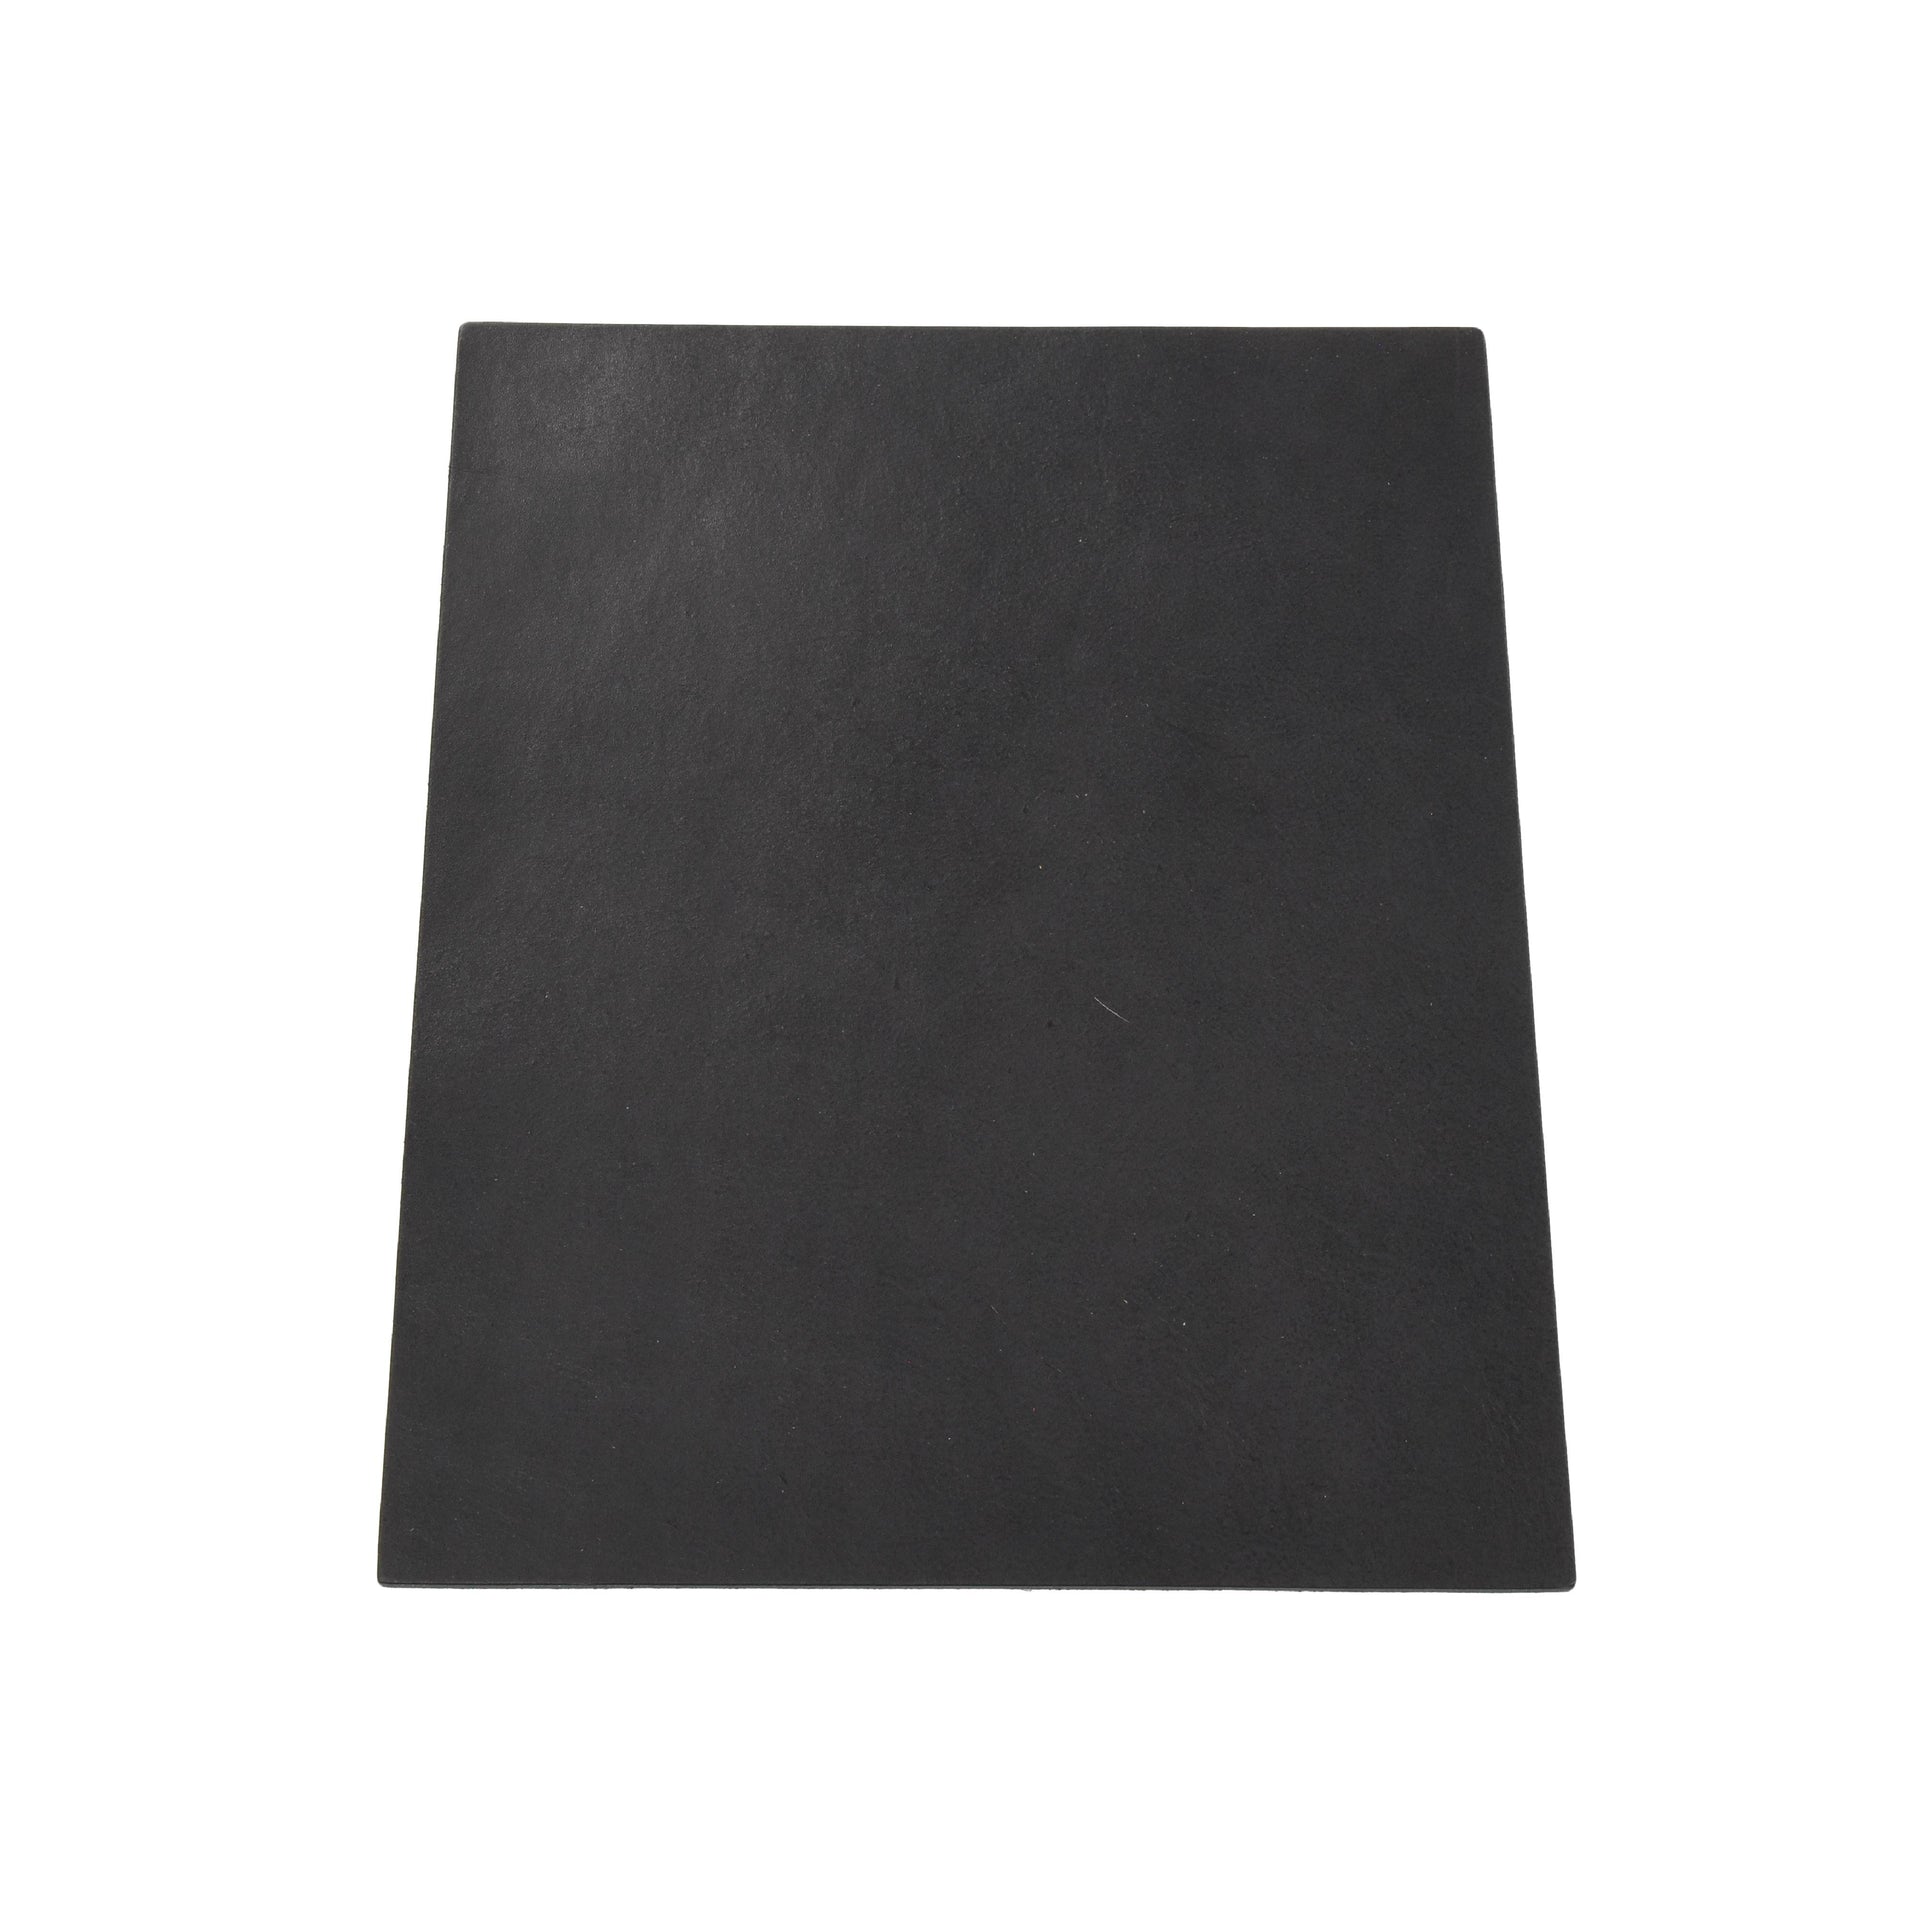 Black, 2-6/8-9 oz Veg Tan Bridle Pre-cuts, Artisans Choice, 8 x 10 in. / 5-6 oz. | The Leather Guy